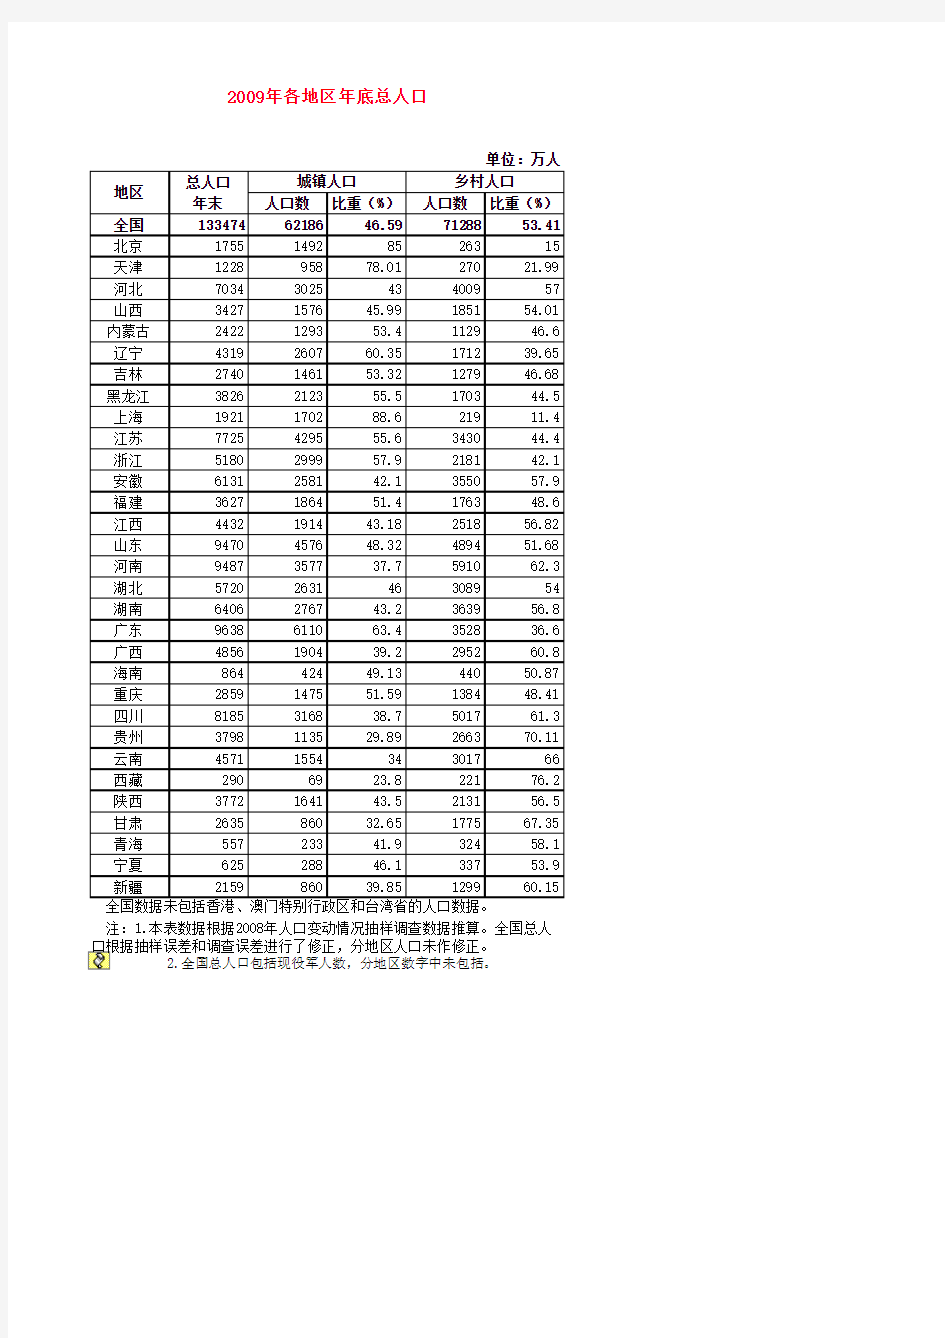 【Excel表格版】中国历年各地区年底总人口